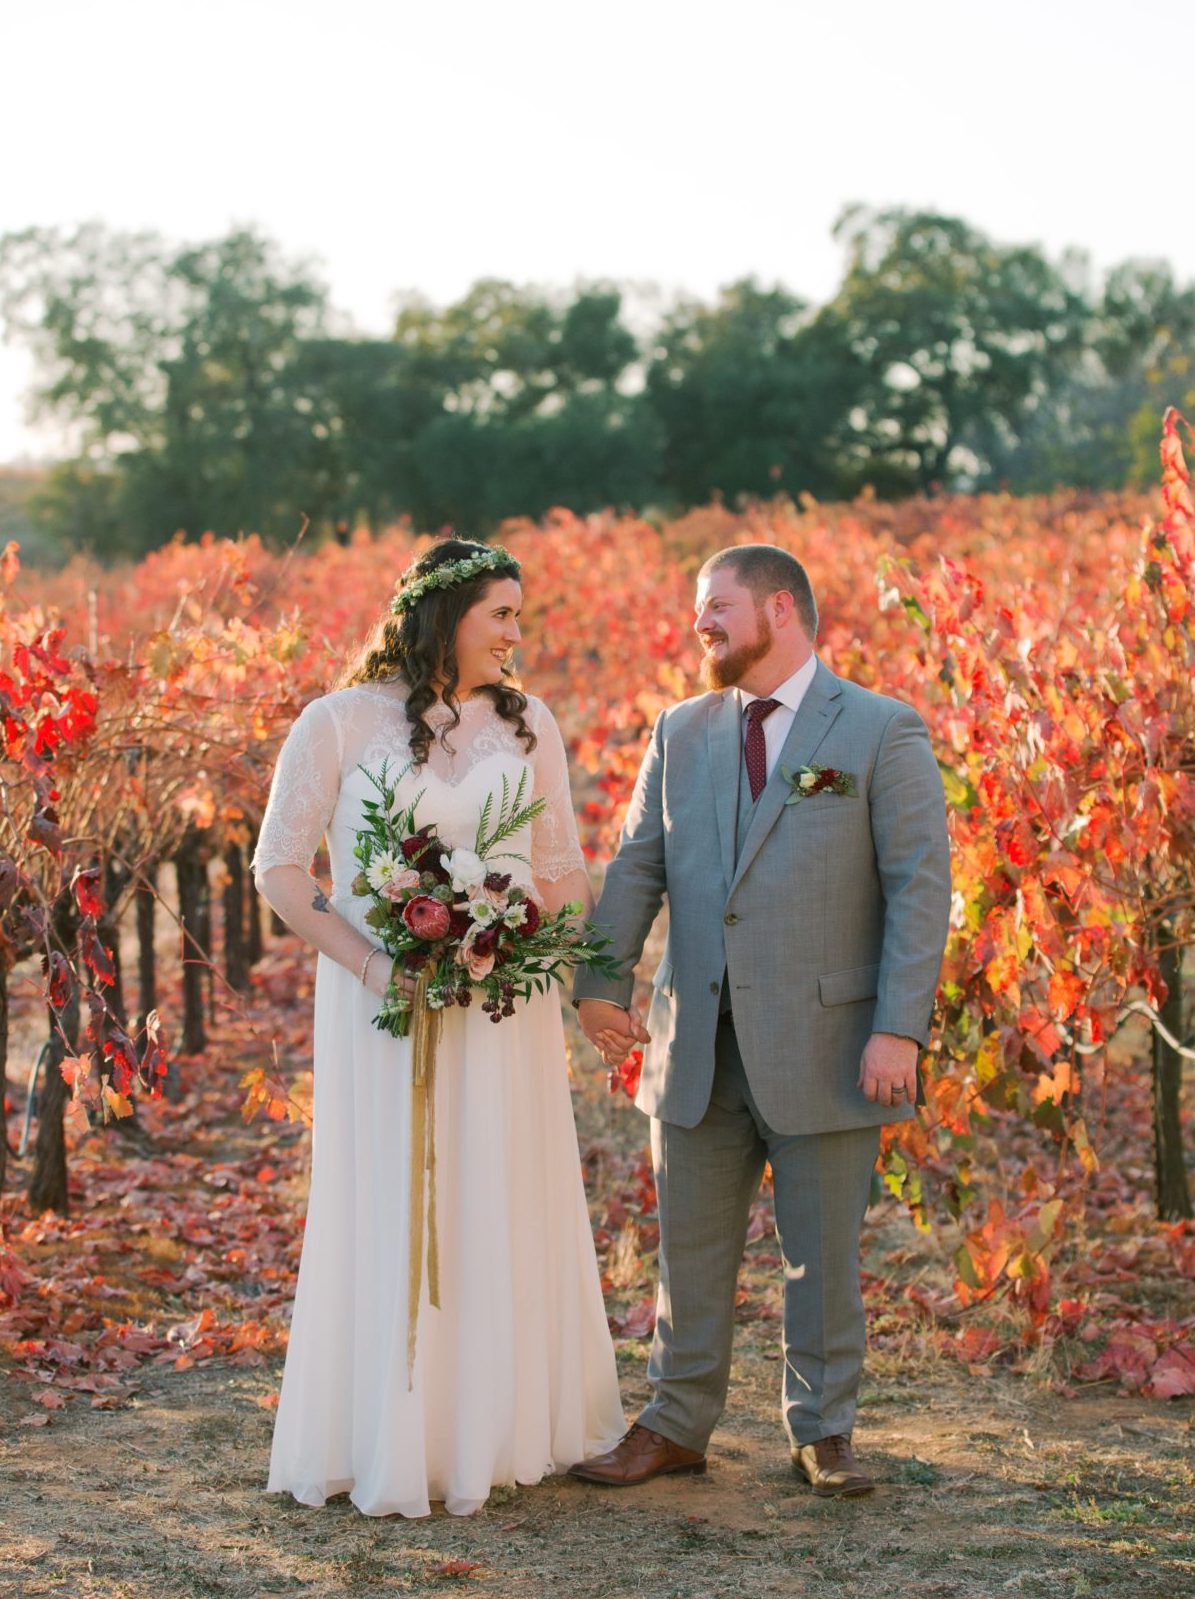 Burgundy and white wedding inspiration, burgundy bridesmaid dresses, Jennifer Clapp Photography